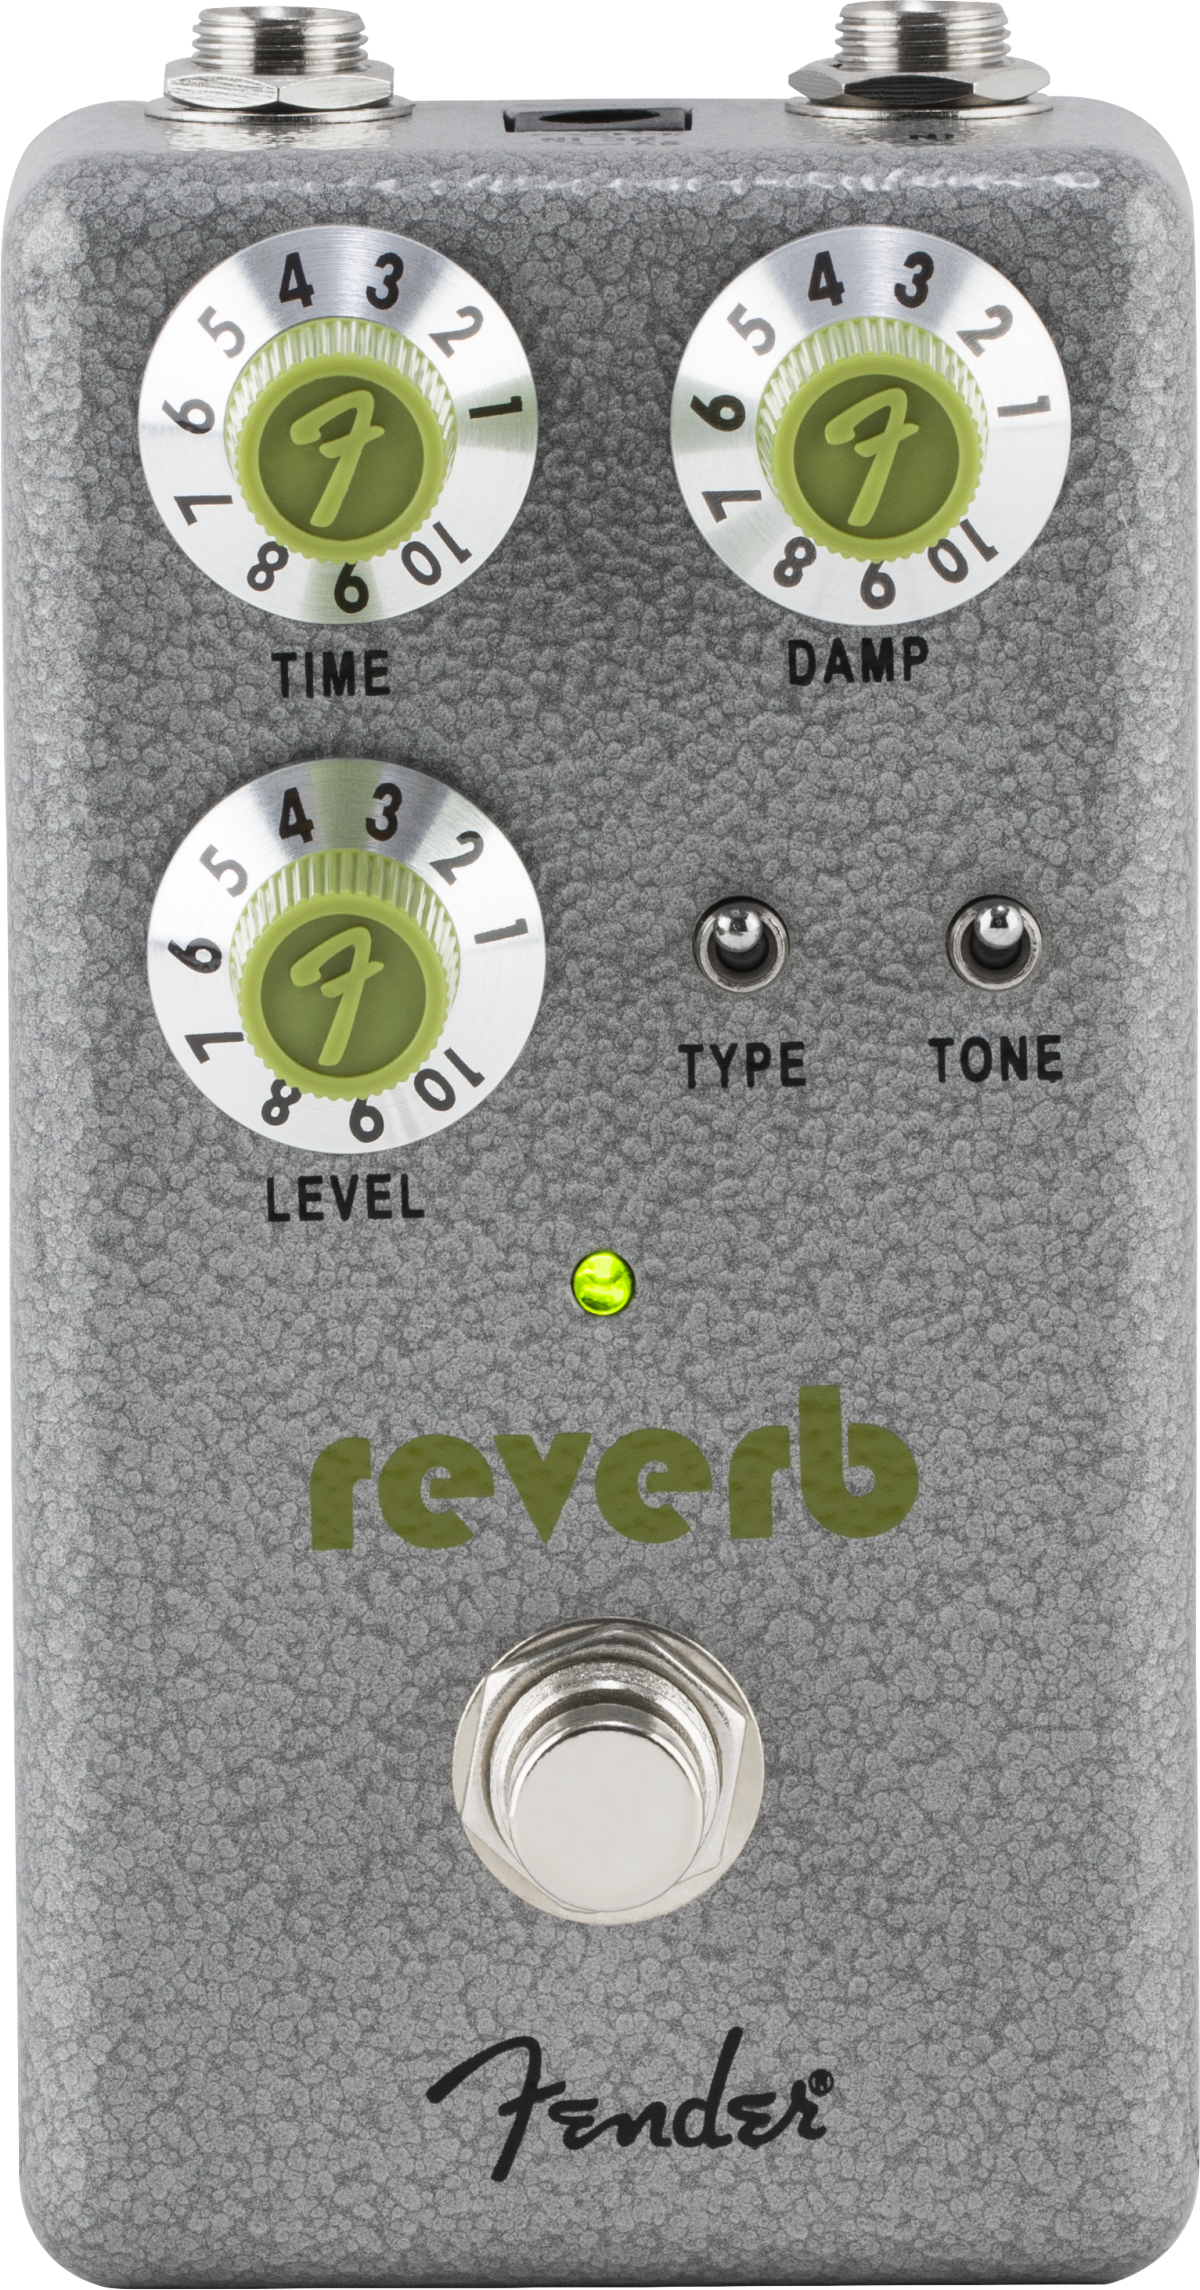 Fender Hammertone Reverb - Reverb, delay & echo effect pedal - Variation 1